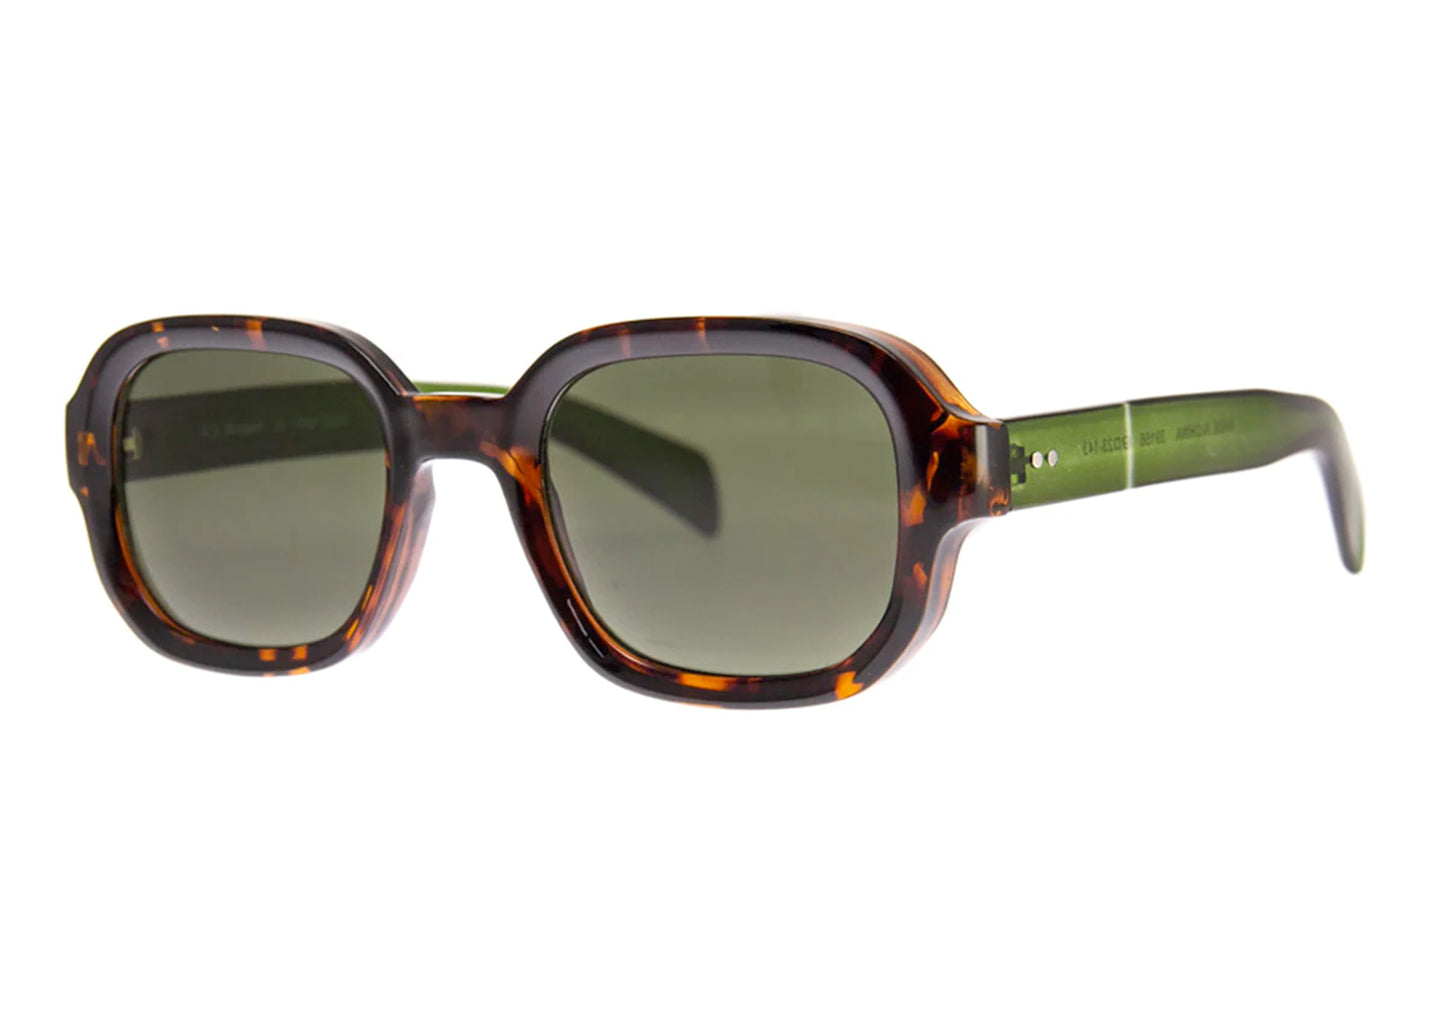 Comfort Zone Sunglasses in Tortoise & Green